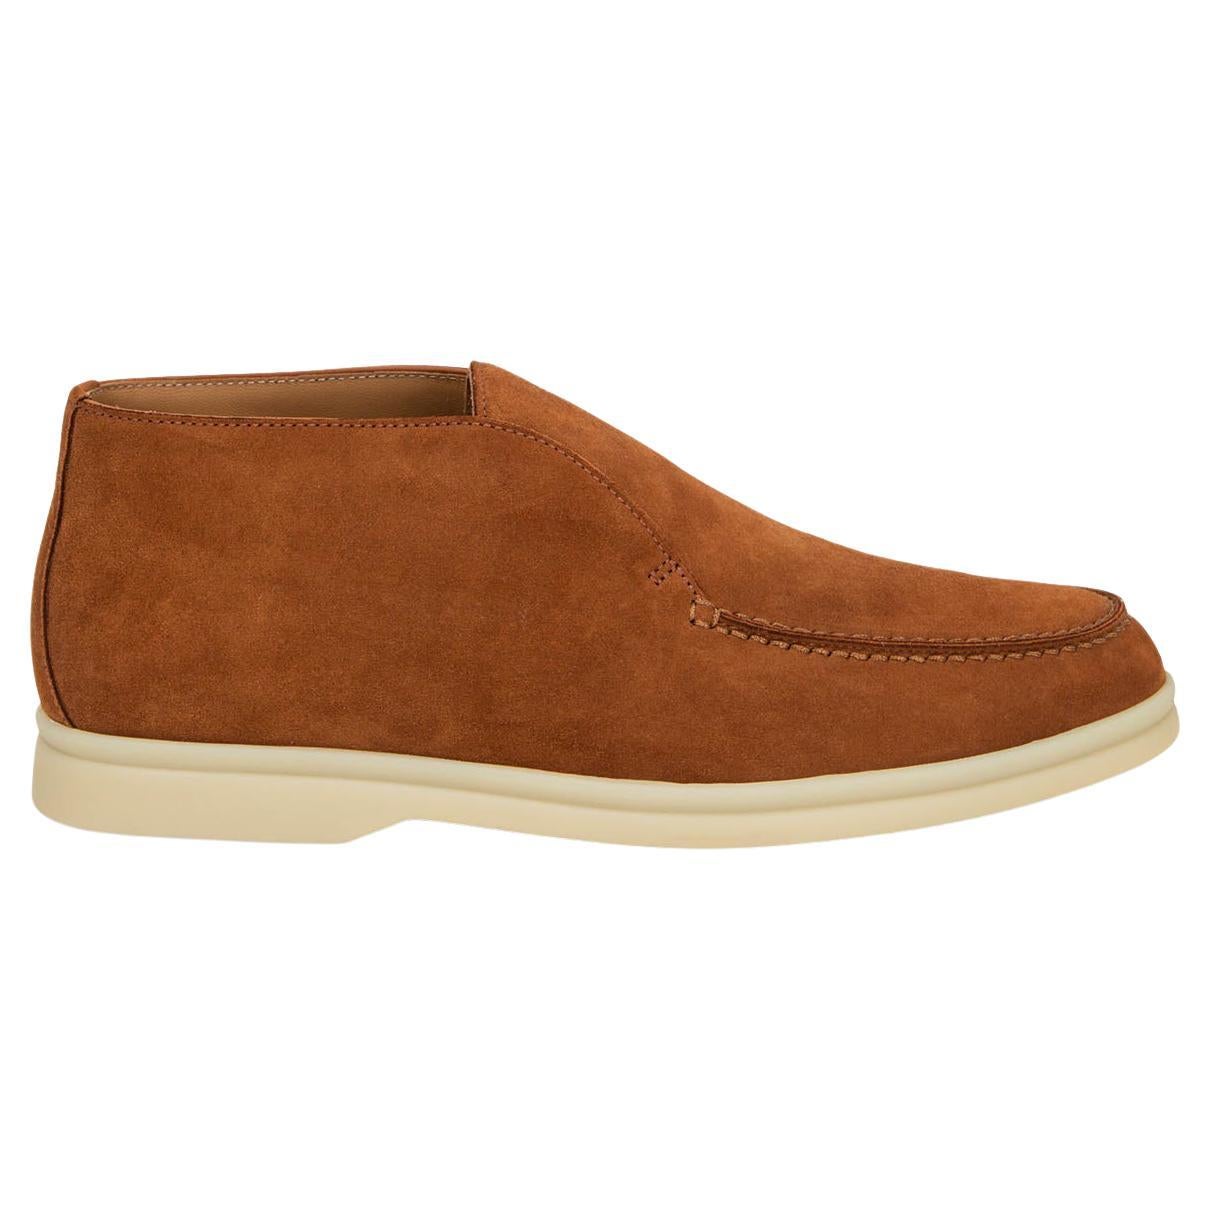 LORO PIANA cognac brown suede OPEN WALK Loafers Shoes 37